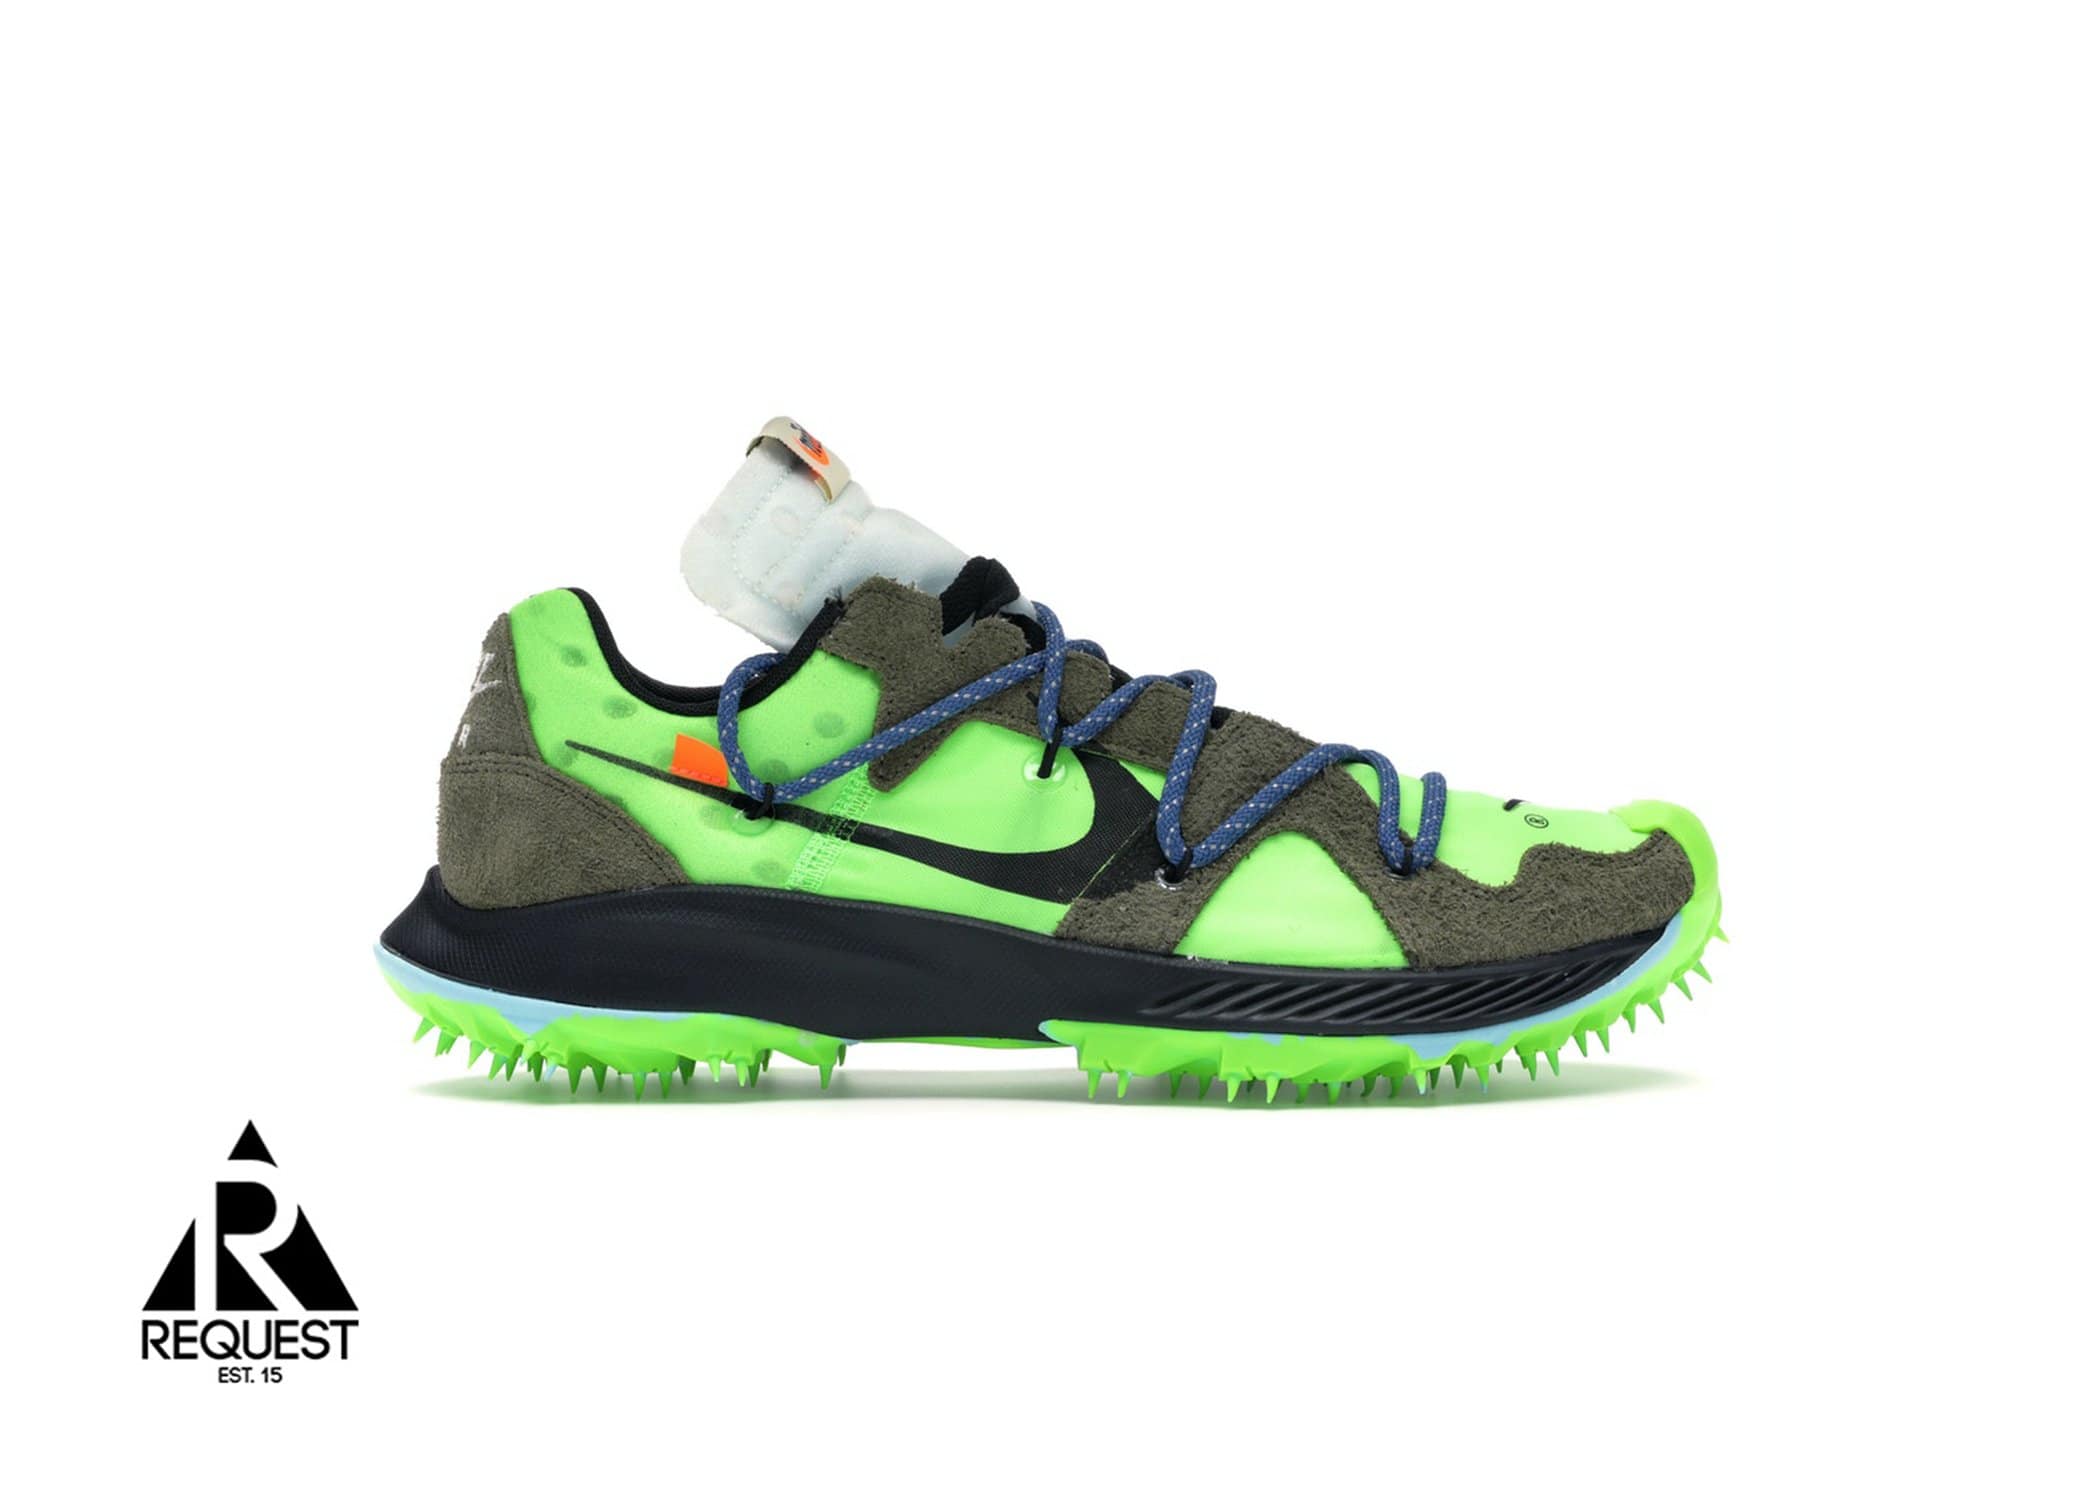 Nike Zoom Off White Terra Kiger “Green”